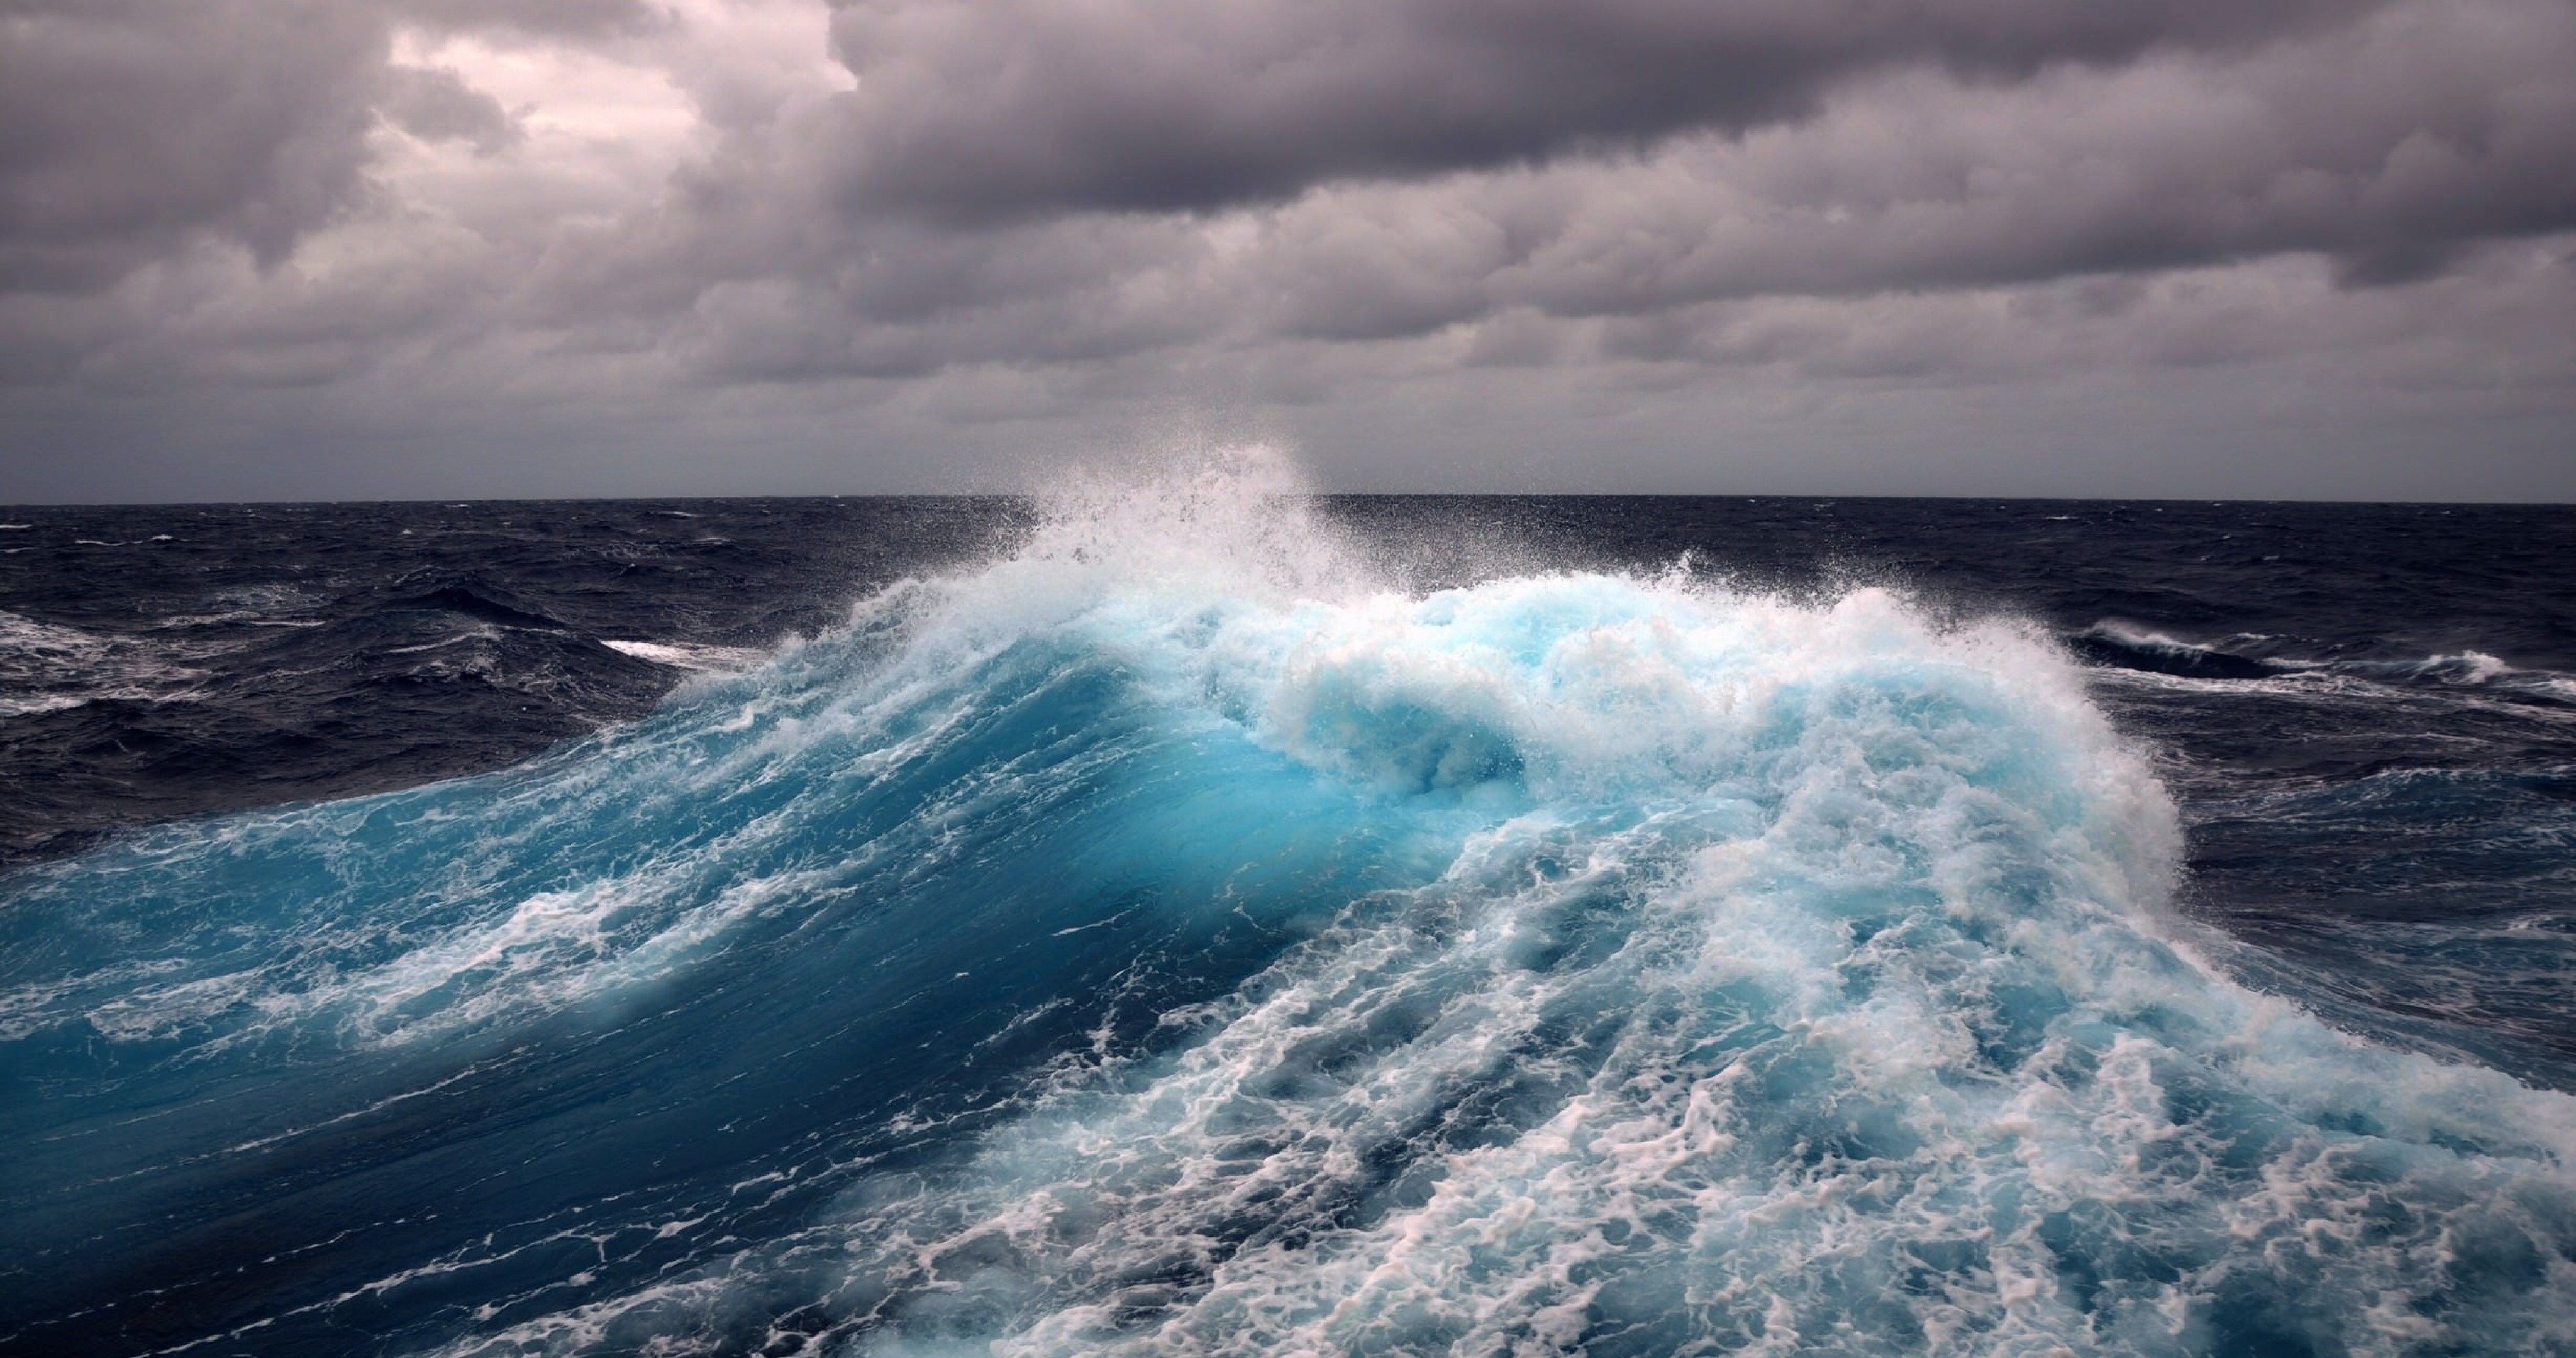 water wave 4k ultra HD wallpaper. Sea waves, Waves wallpaper, Ocean waves